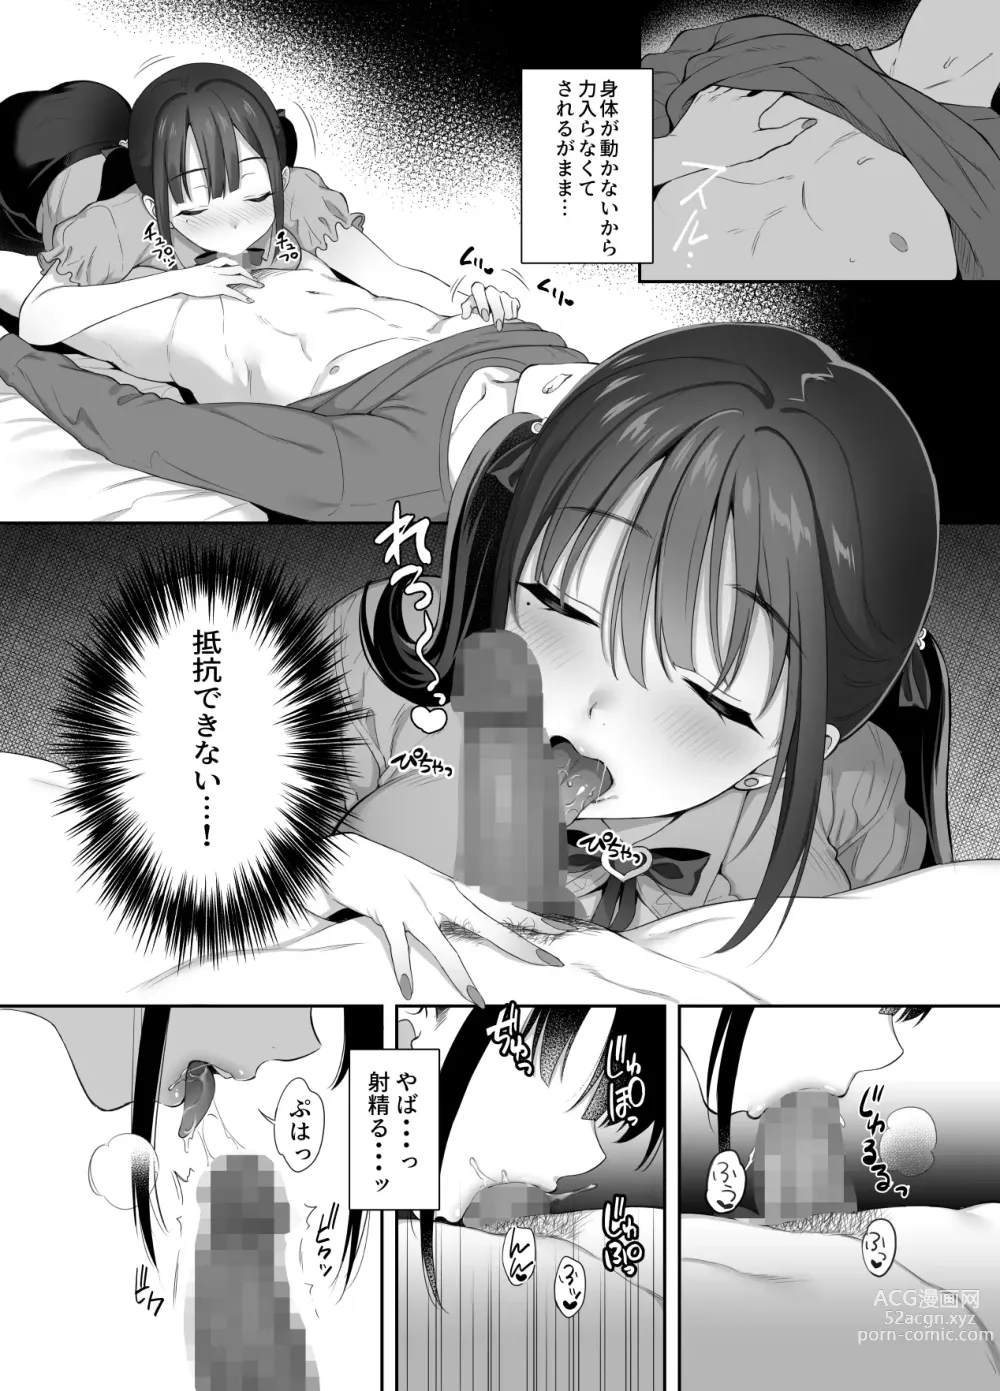 Page 13 of doujinshi 廃墟で地雷女子と夜中じゅう中出しセックスした話2